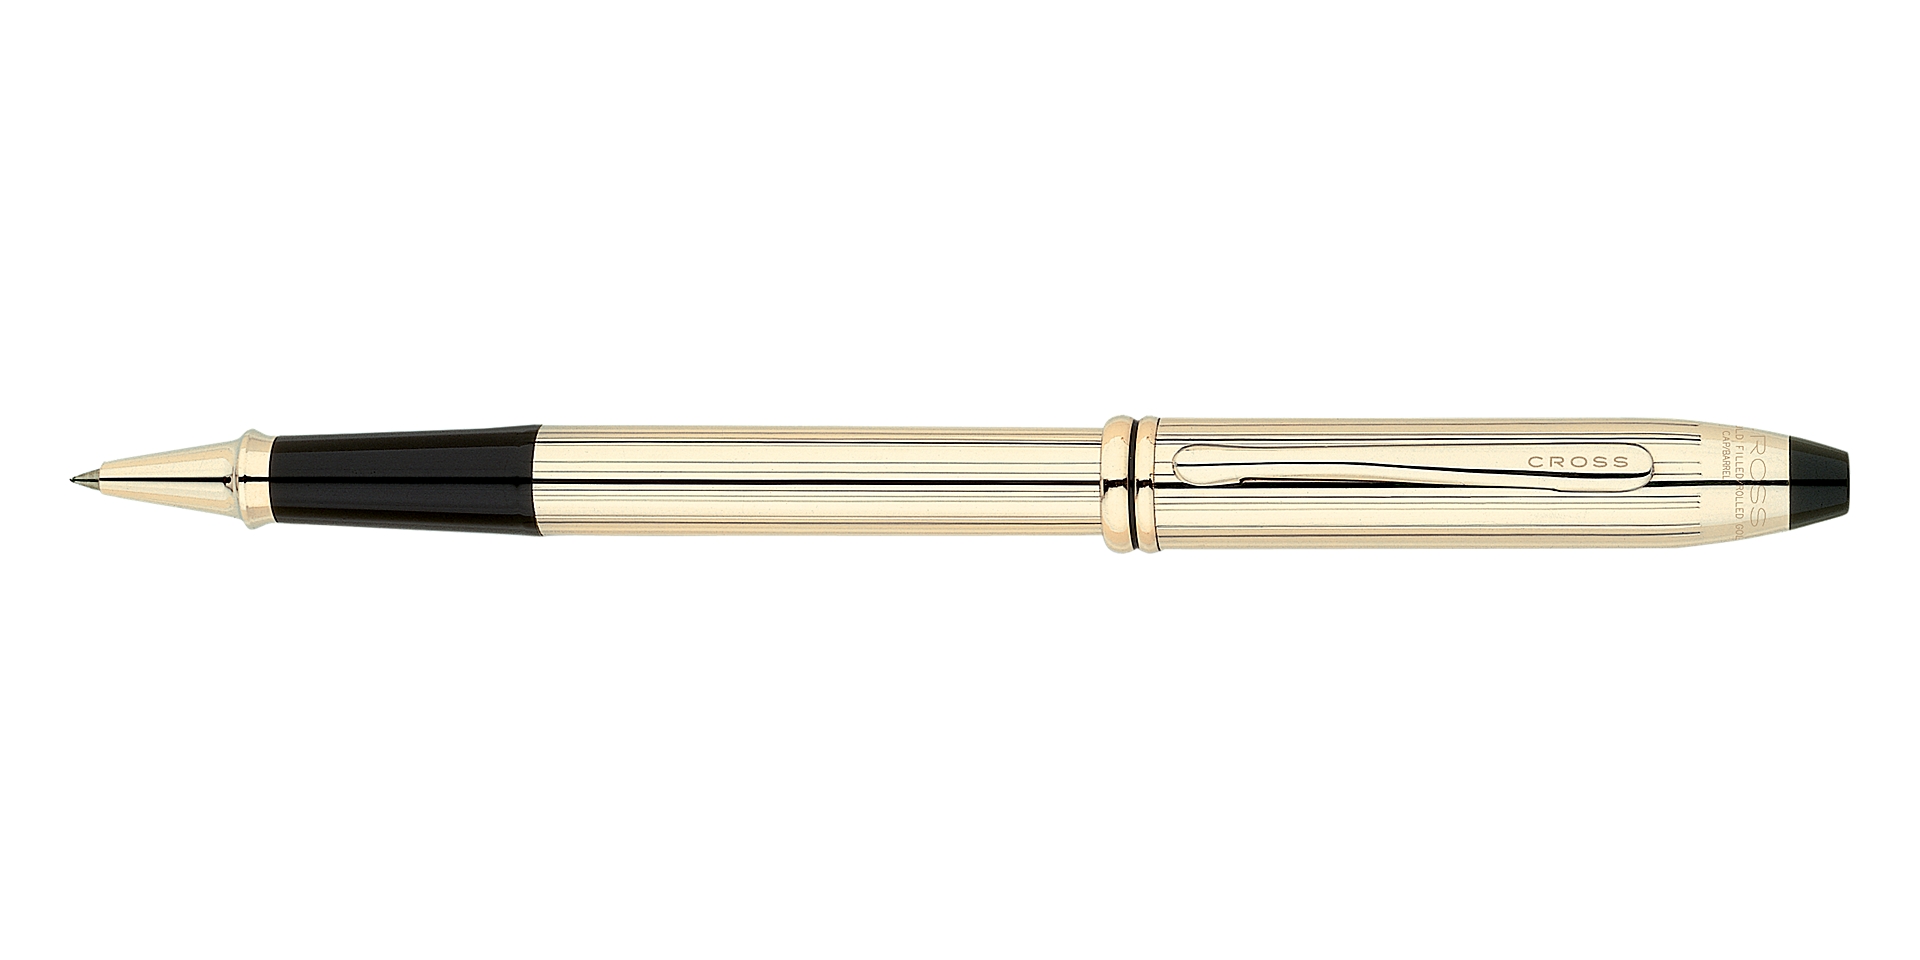  Townsend 10 Karat Gold Filled/Rolled Gold Rollerball Pen